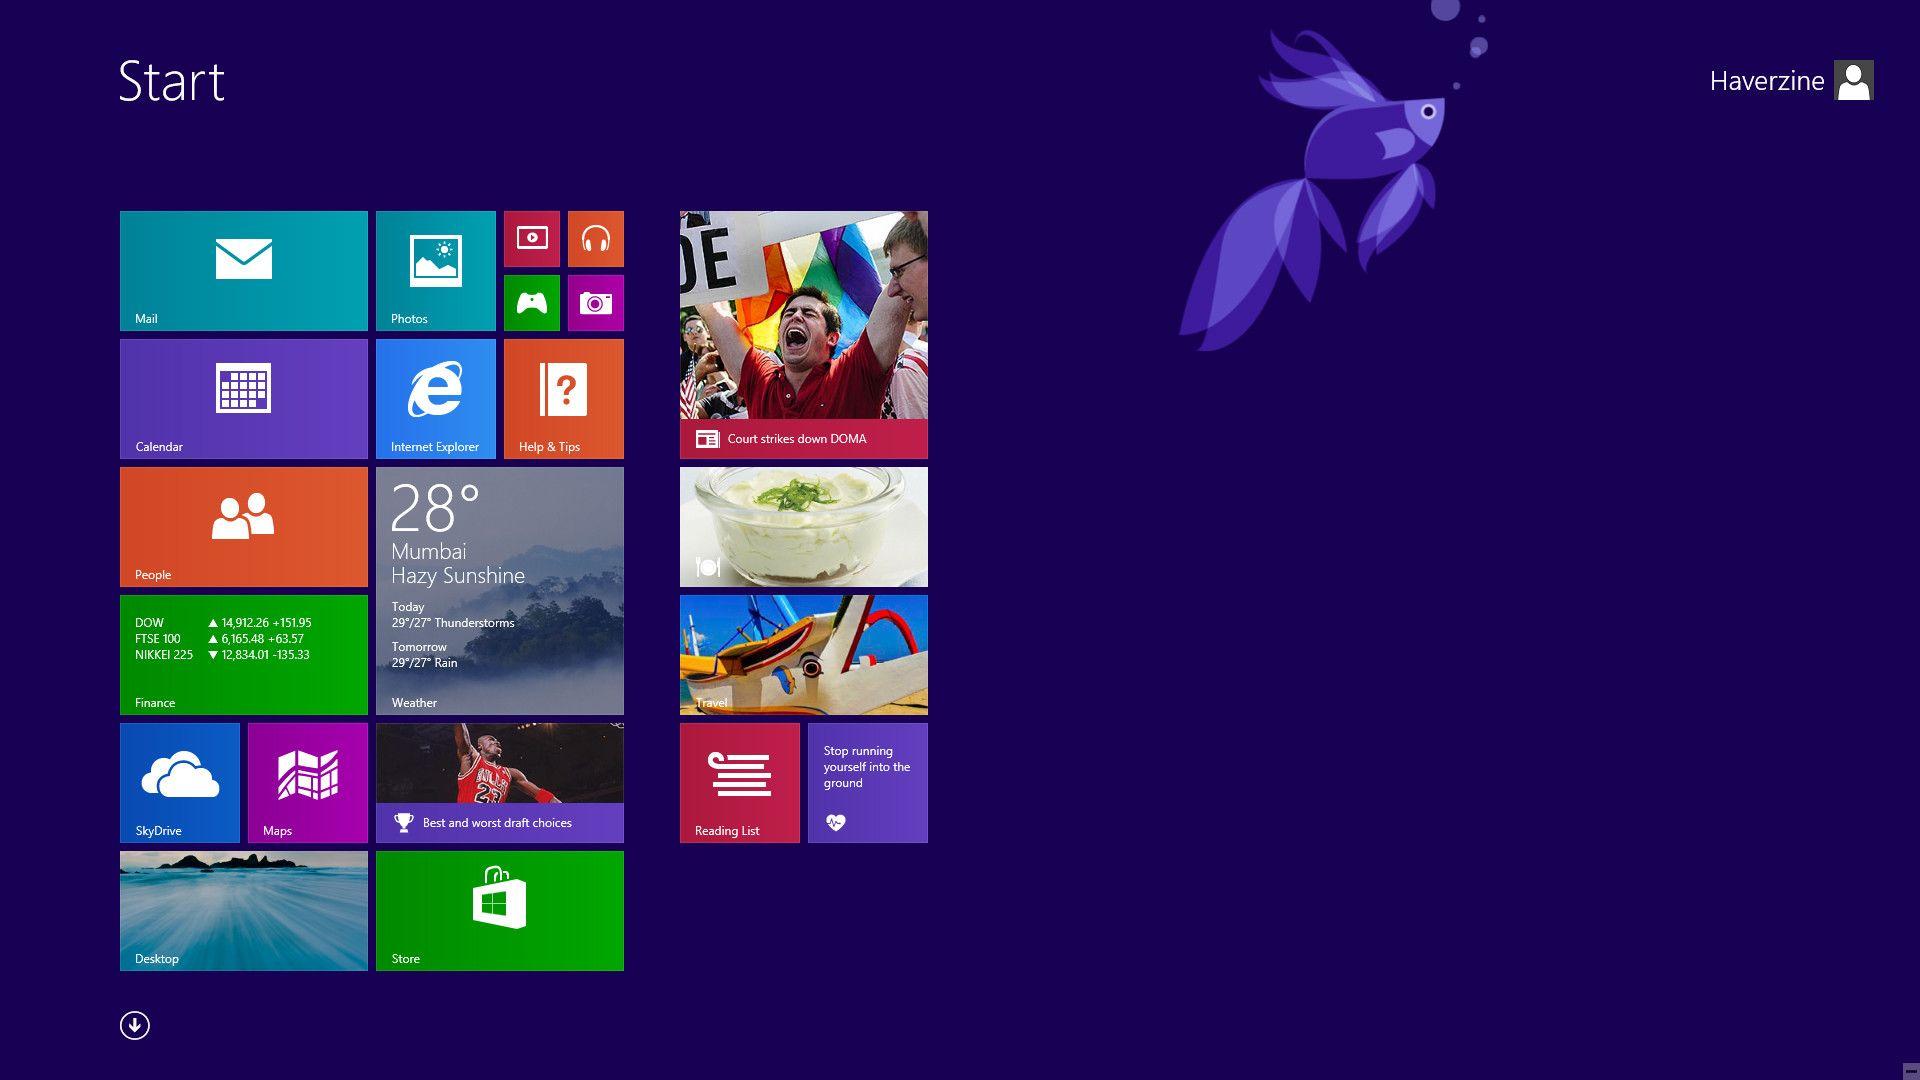 Windows 8.1 fish is missing from start menu screen